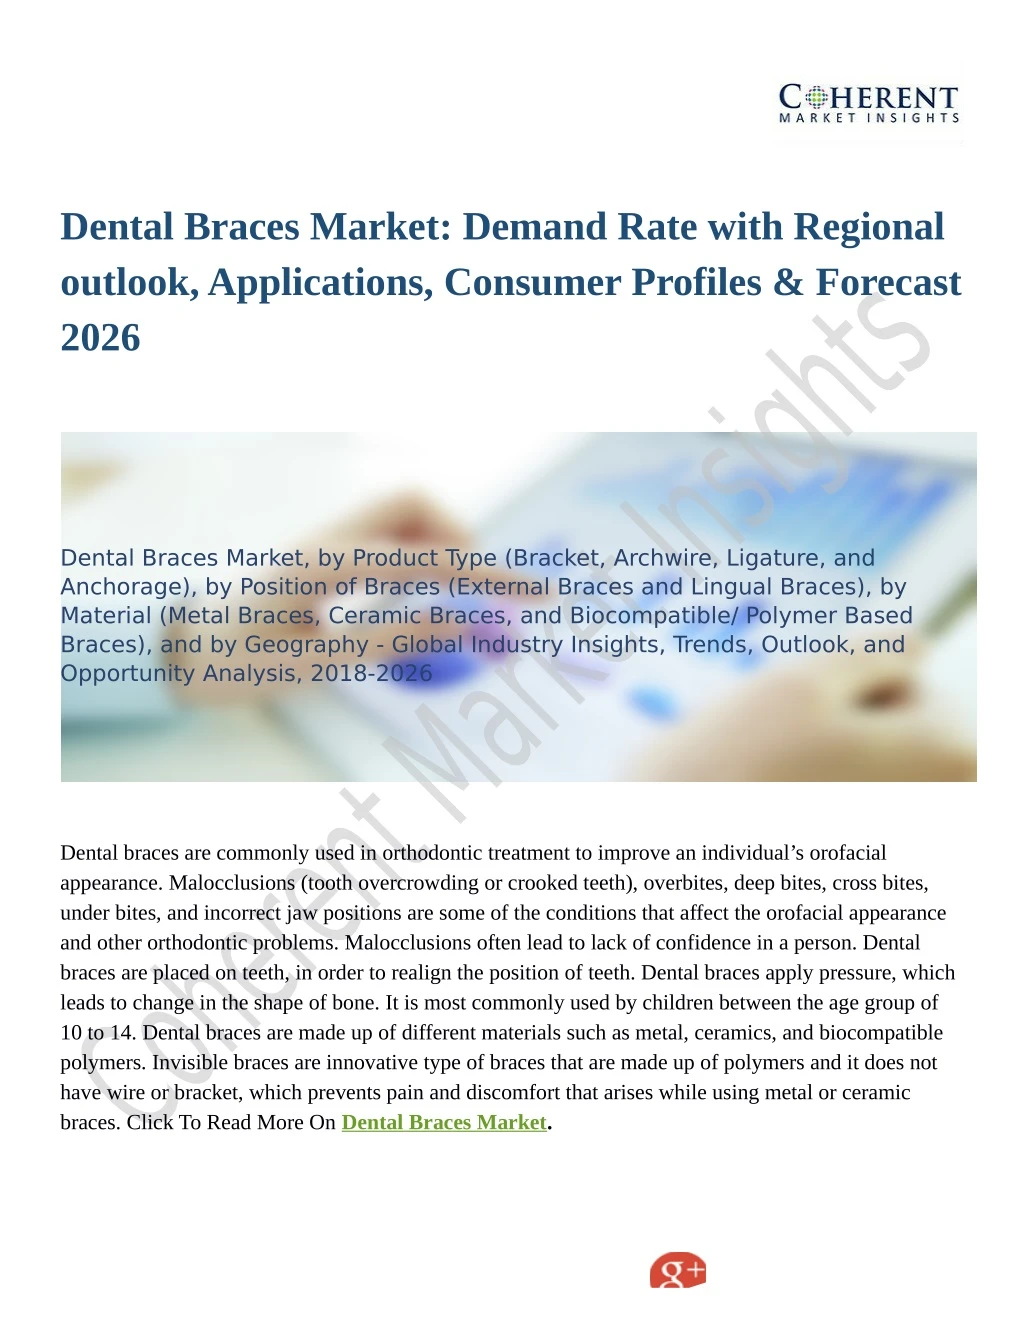 dental braces market demand rate with regional